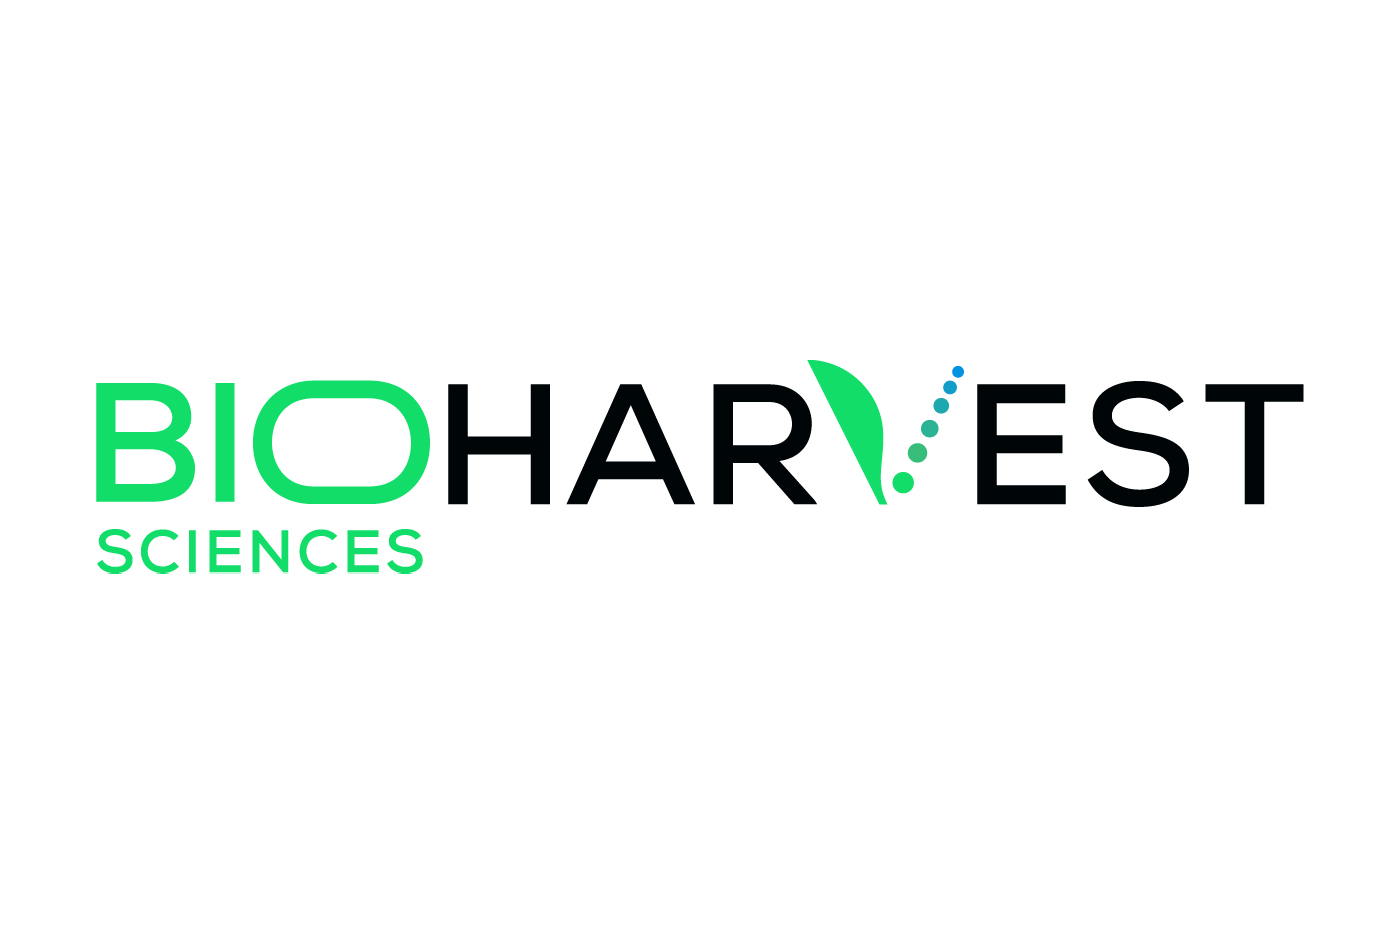 Bioharvest Sciences Now Producing Cannabis Biomass in Large-Scale Industrial Bioreactors Under R&D License